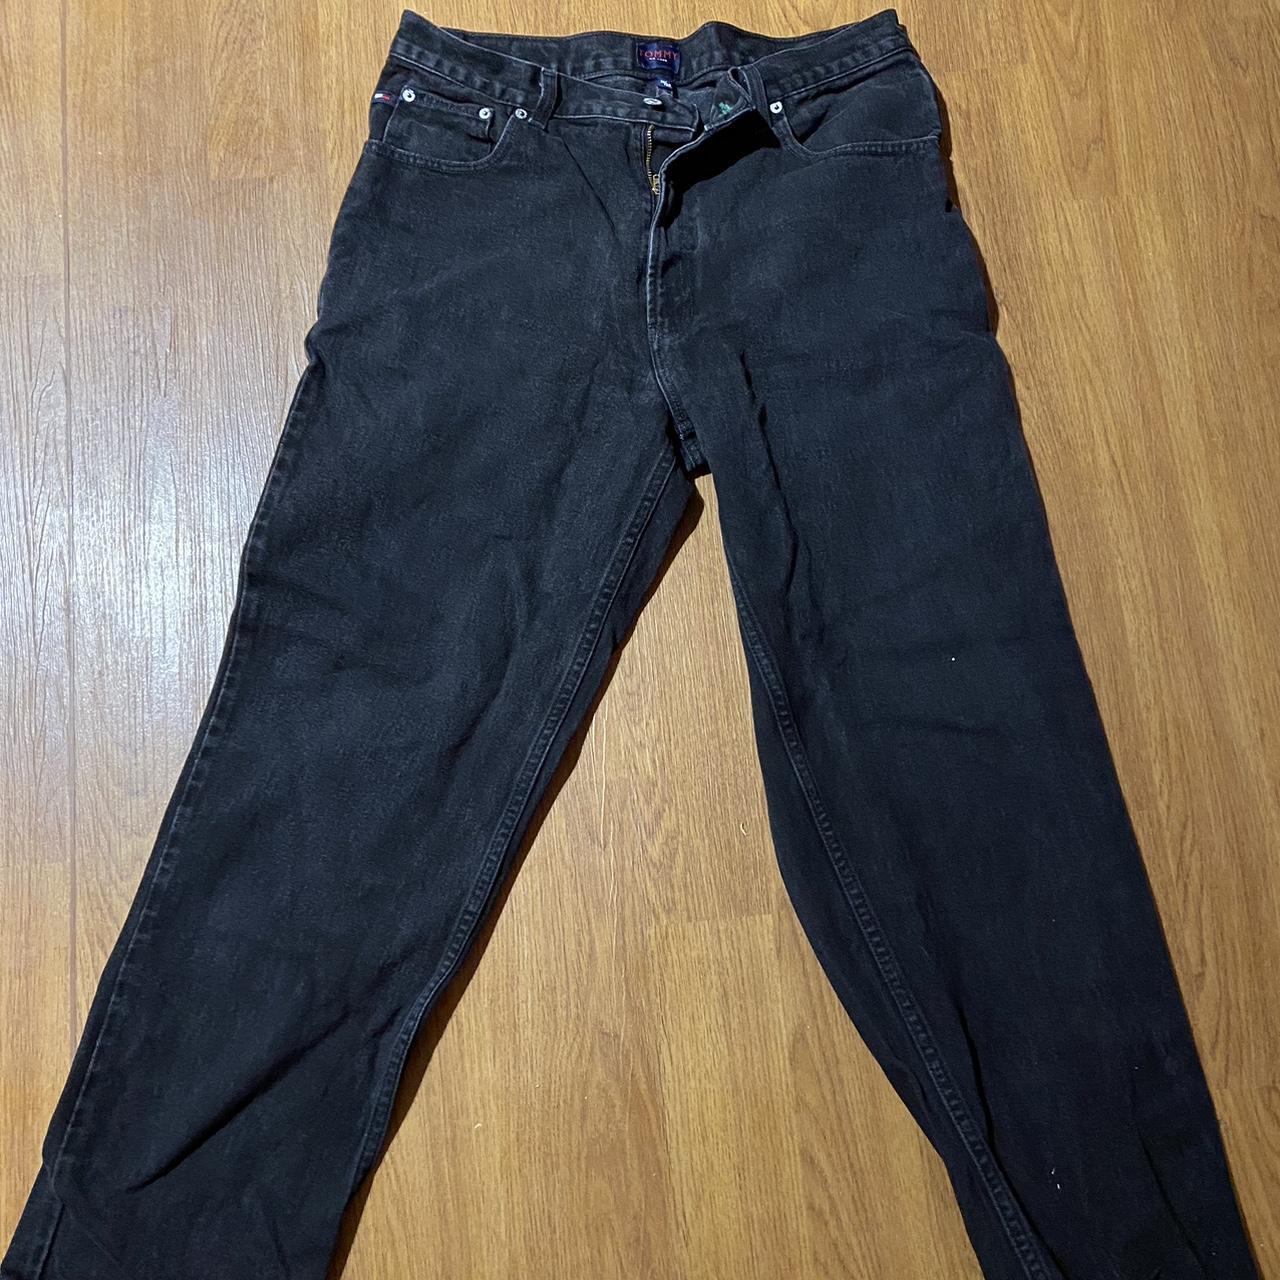 Black Tommy jeans 35/22 Good condition - Depop